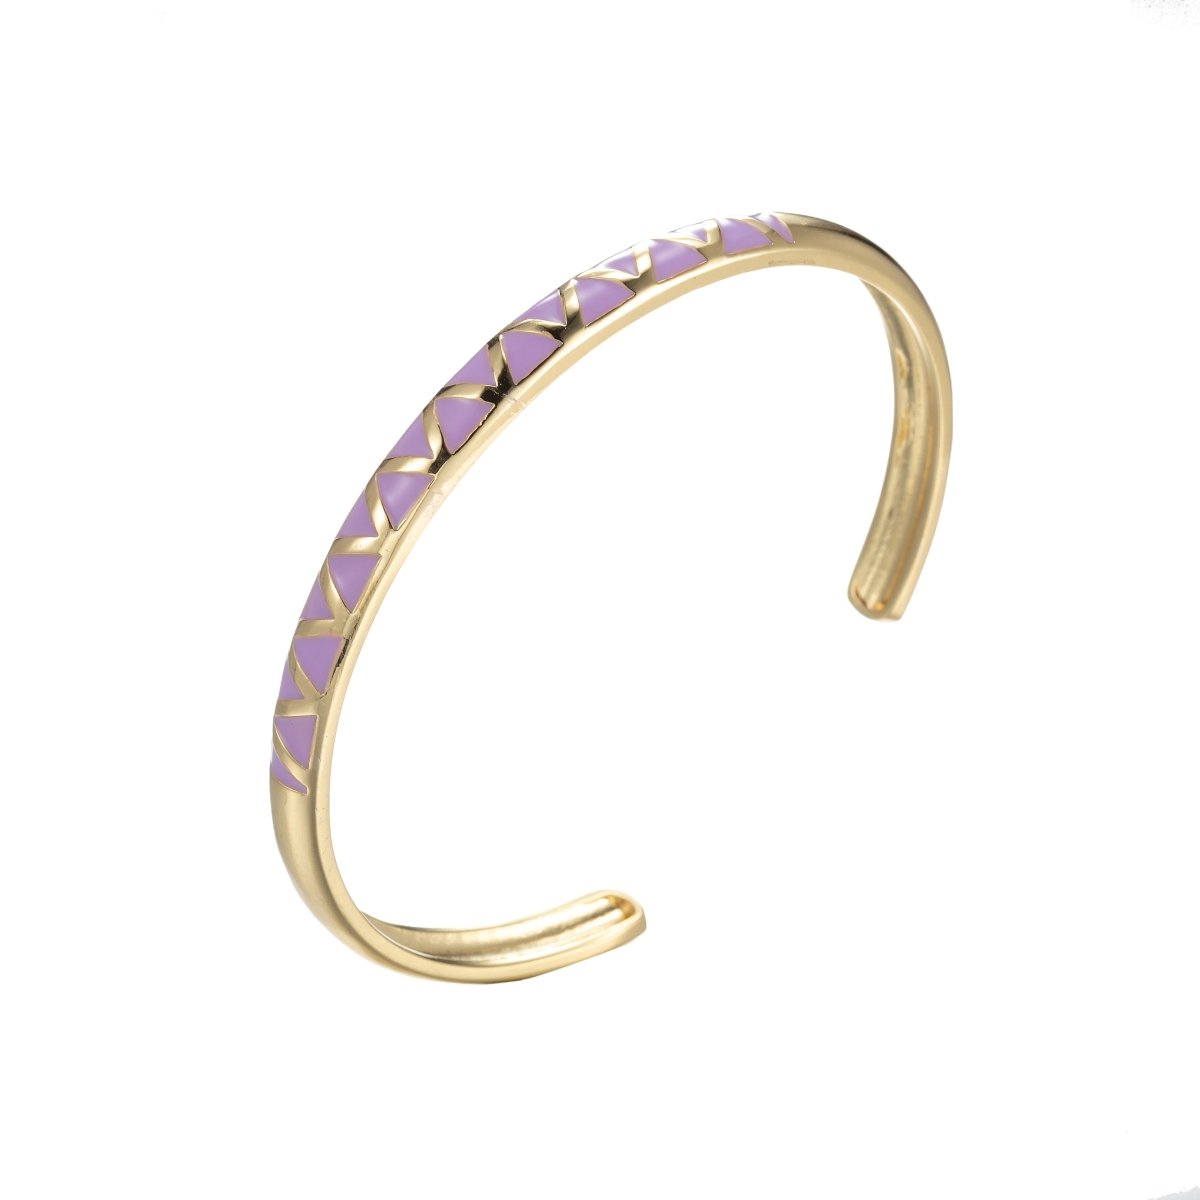 Colorful Enamel Adjustable Bangle Bracelet, 18K Gold Filled Enamel Open Bracelet, stacking bracelet | WA-046 to WA-054 Clearance Pricing - DLUXCA